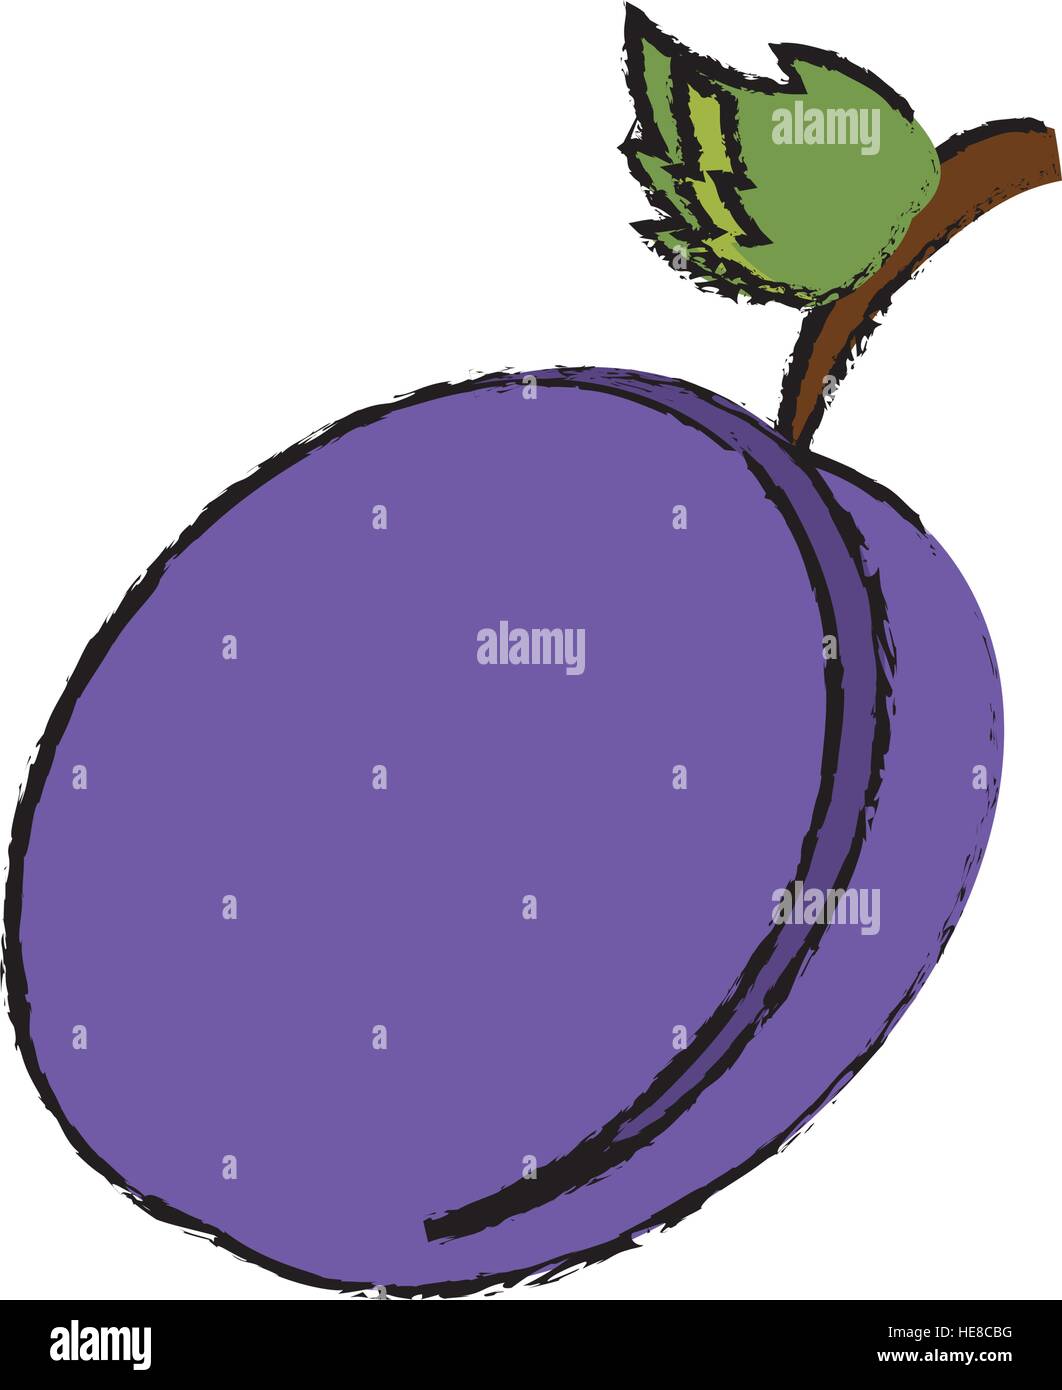 Disegno di prugne frutta organica Immagine e Vettoriale - Alamy